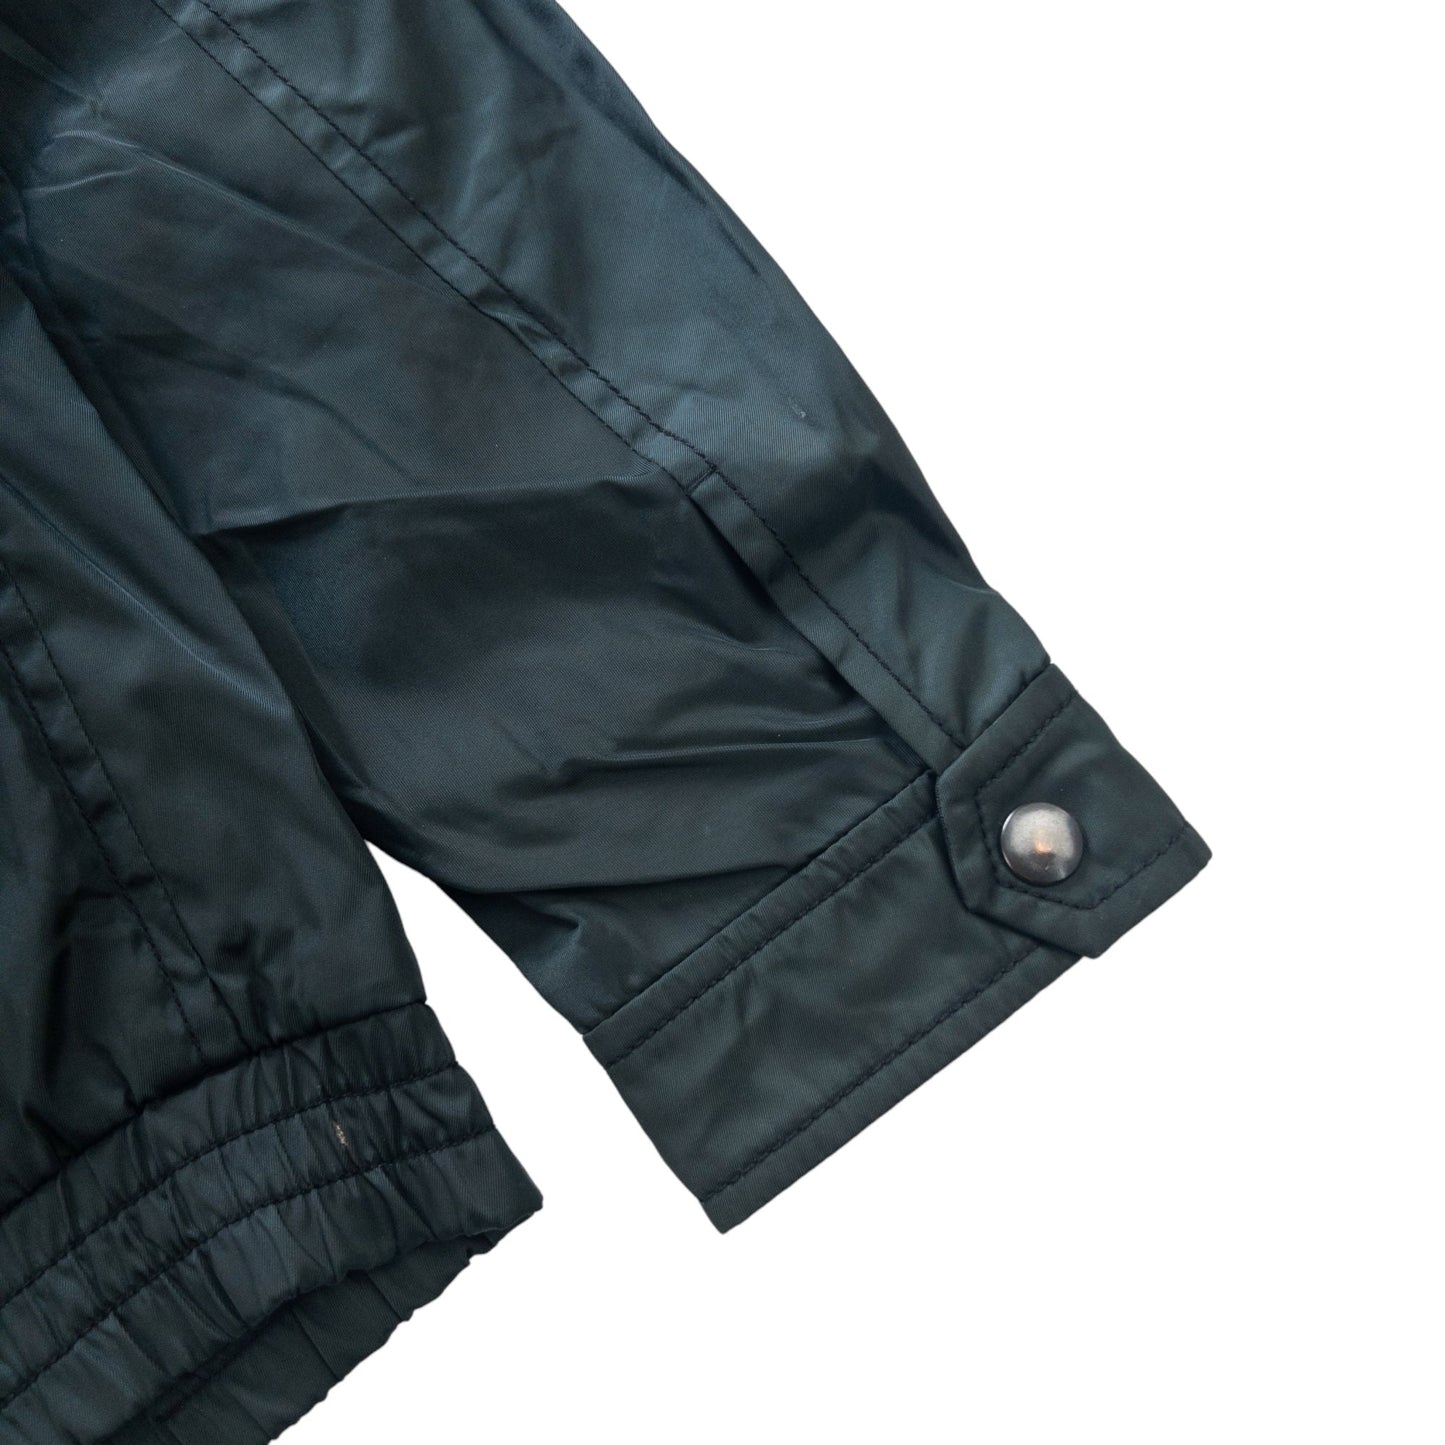 Vintage Prada Zip Up Jacket Size M